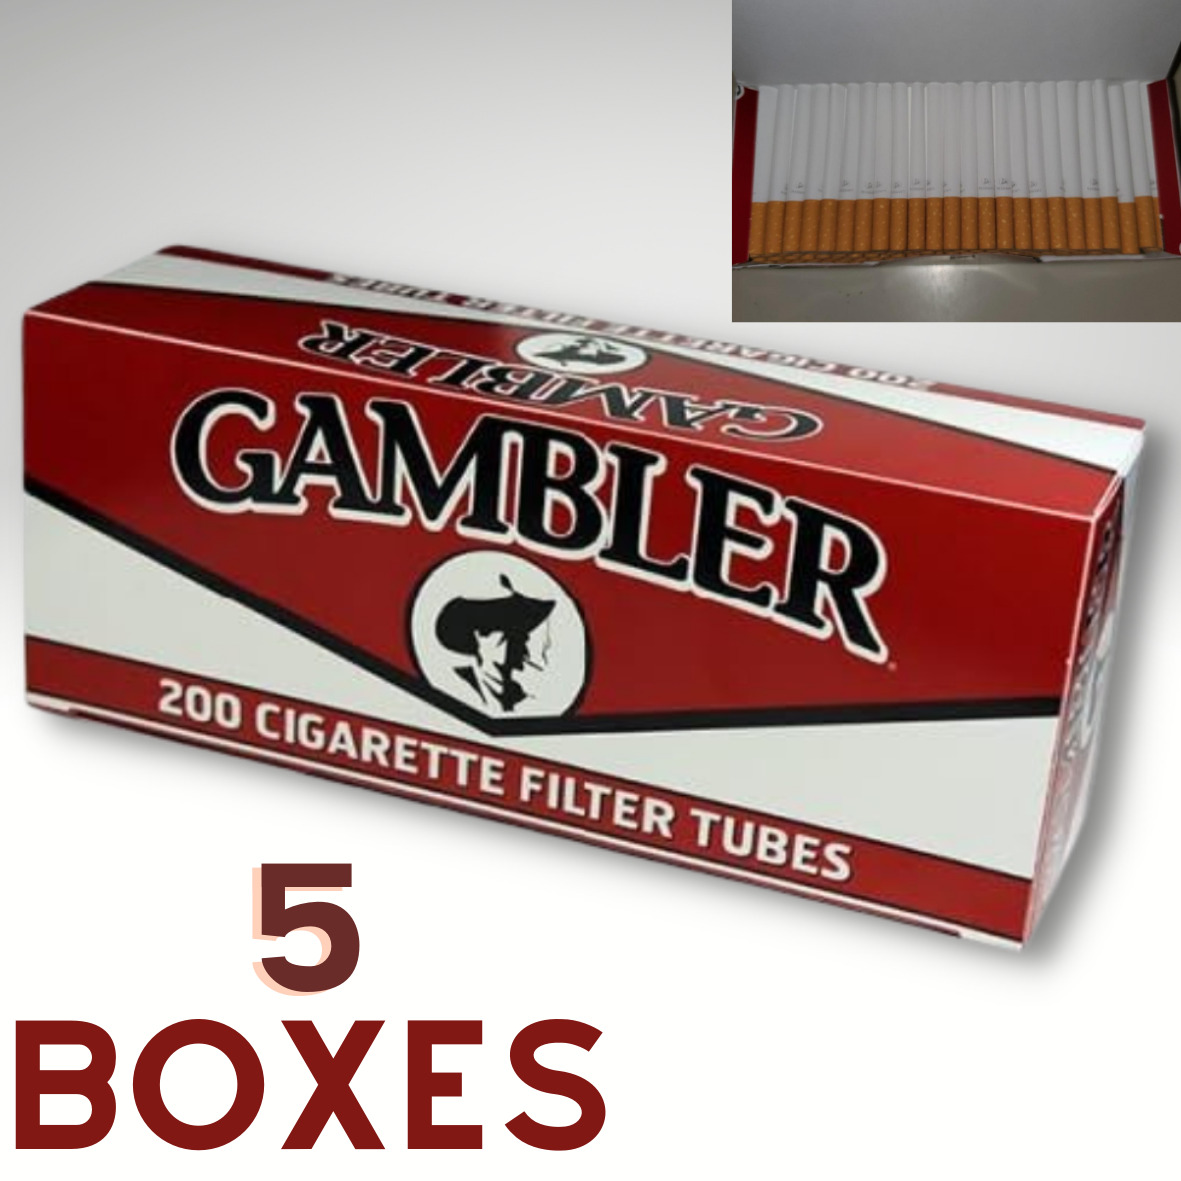 Gambler Regular King Size Cigarette Tubes (5 Boxes) 200ct Box Classic Brand